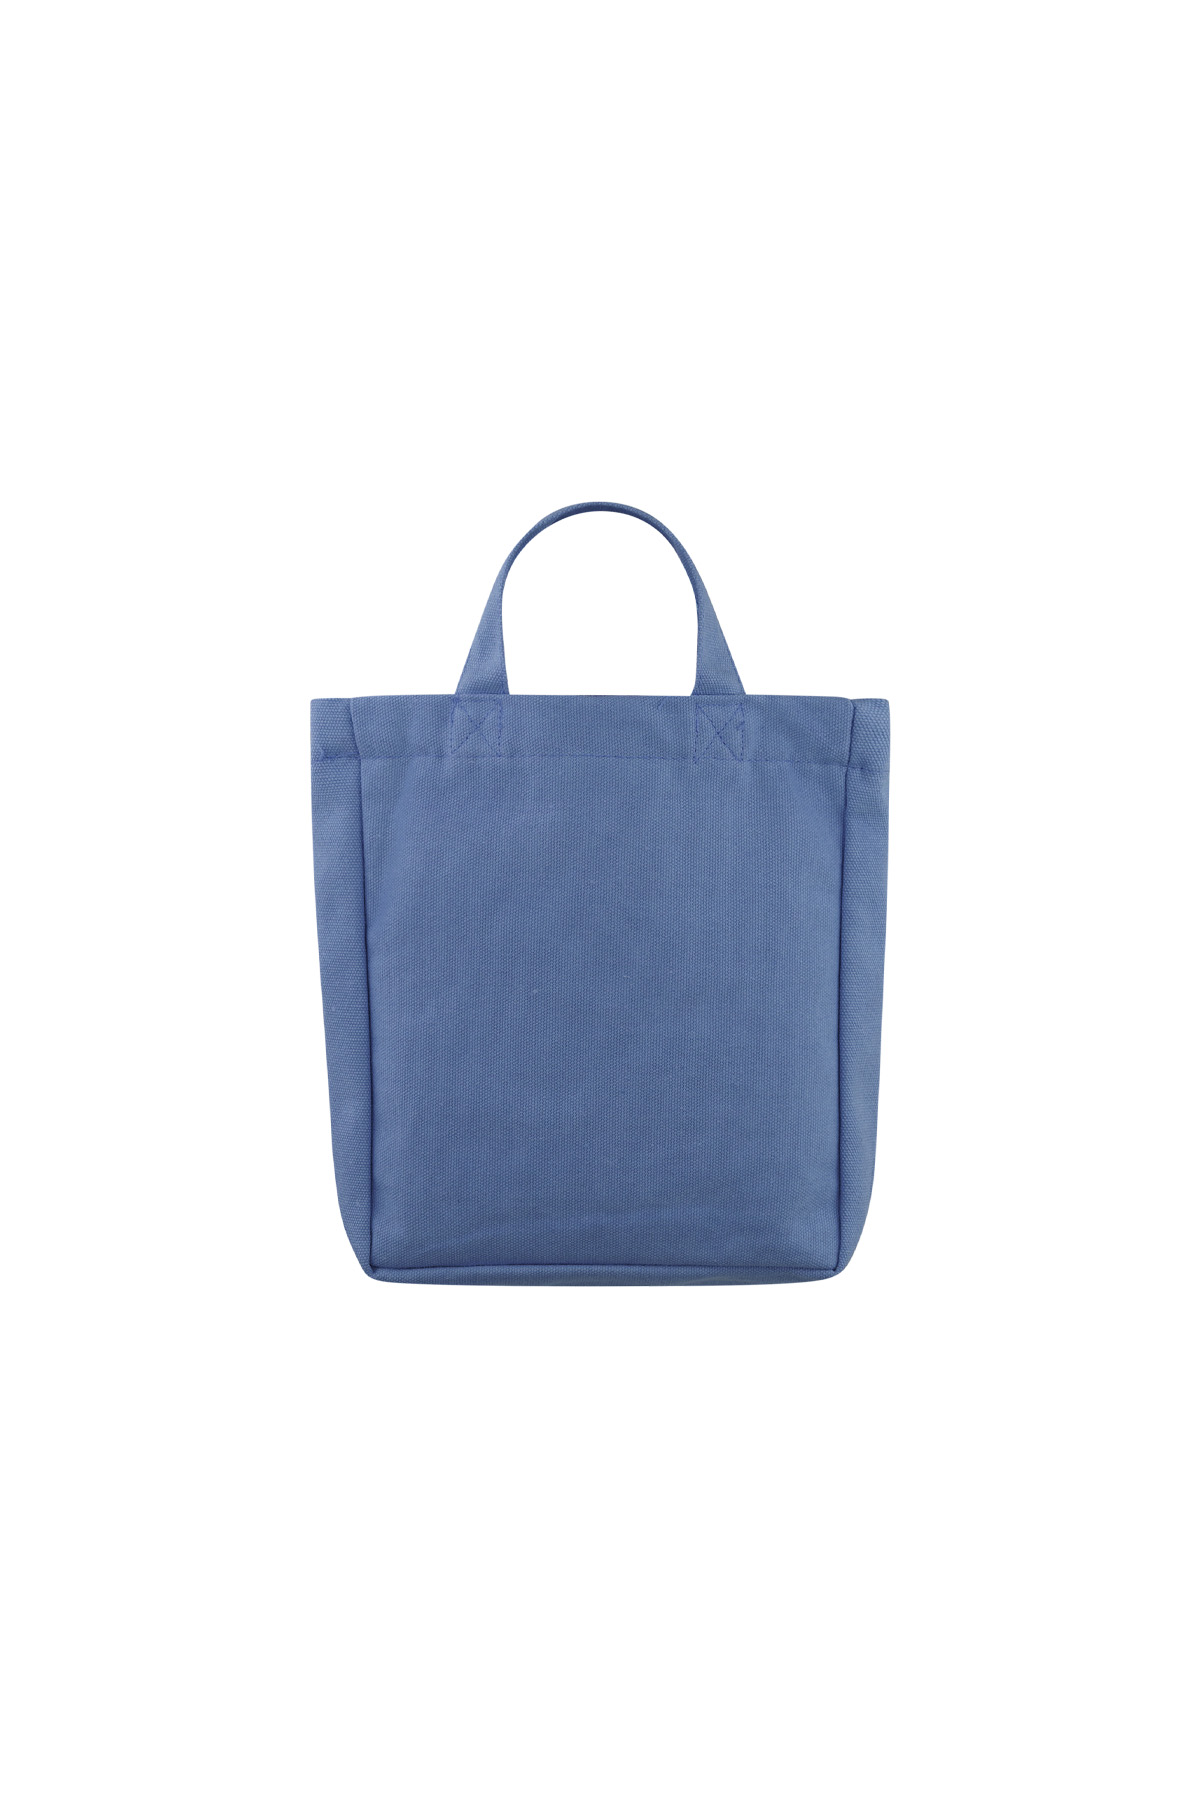 Petit sac en jean incontournable - bleu h5 Image4